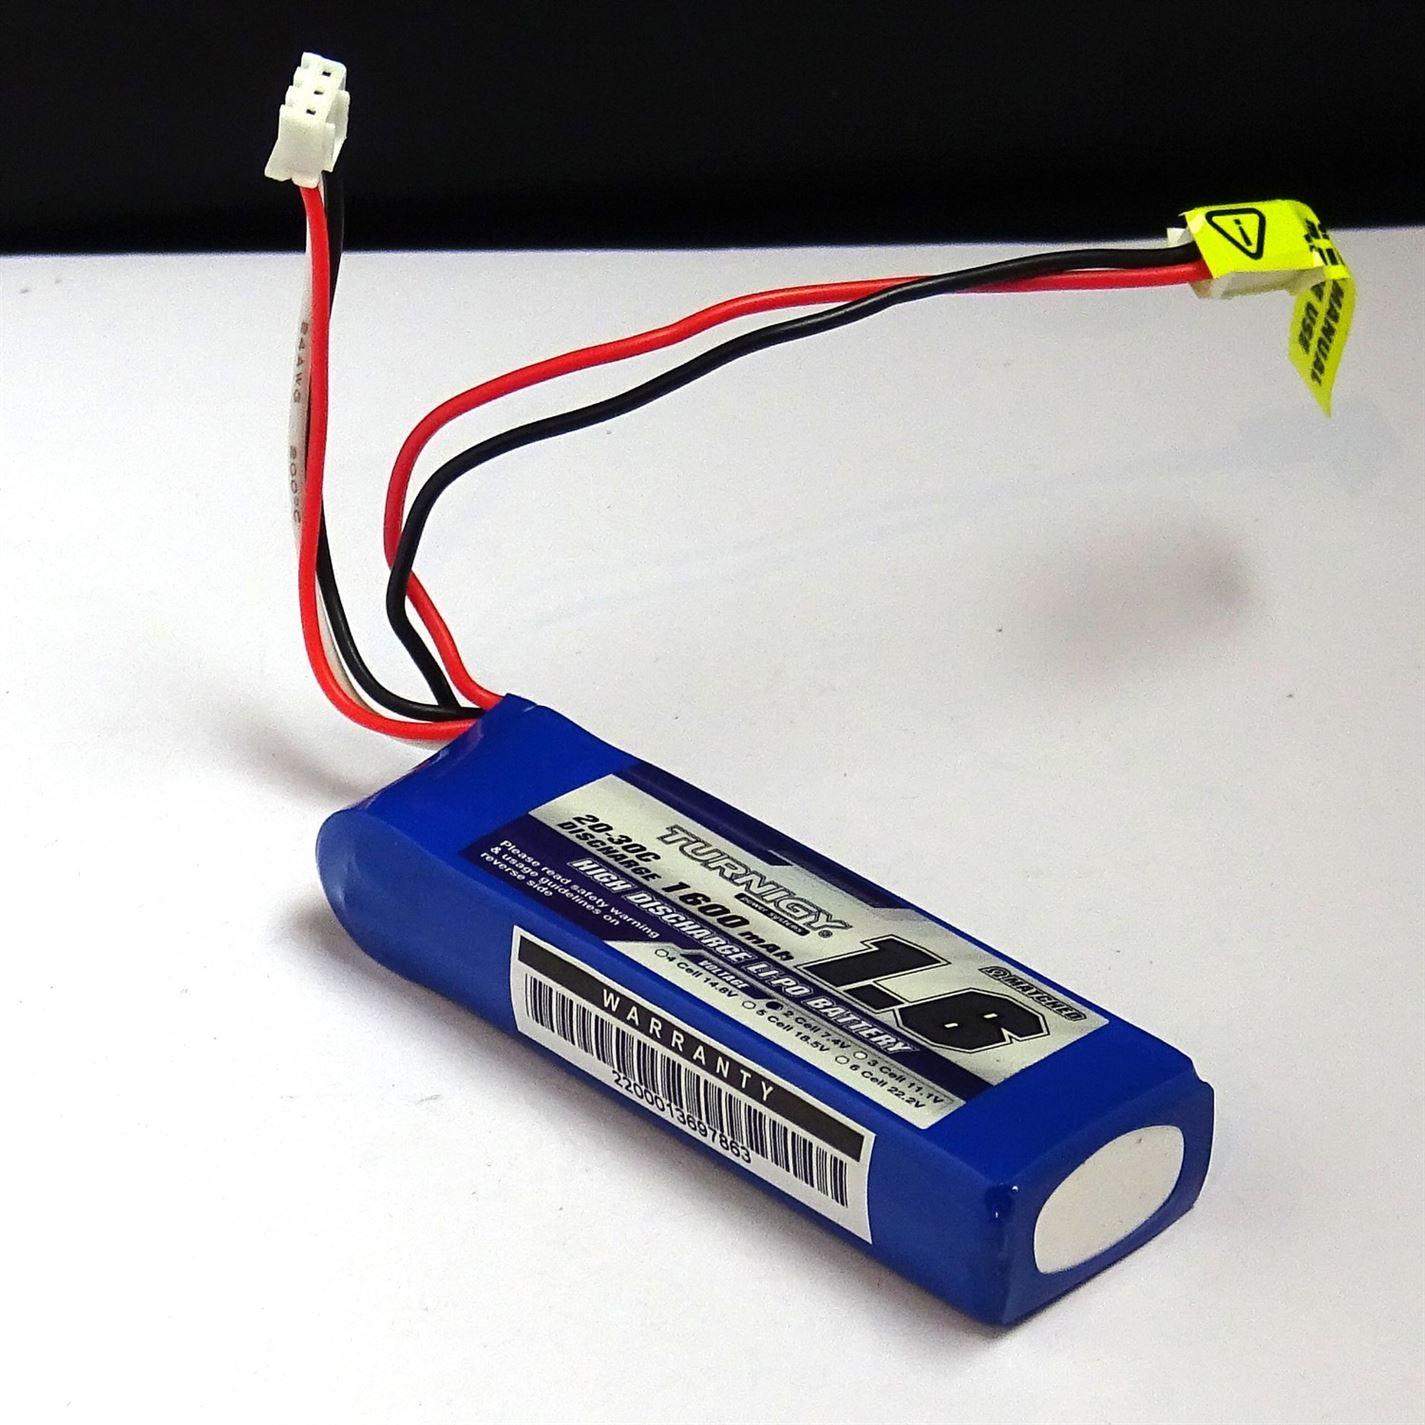 Turnigy 1600mAh 2S 20C Lipo Battery Pack (Losi Mini Compatible) - UK Seller